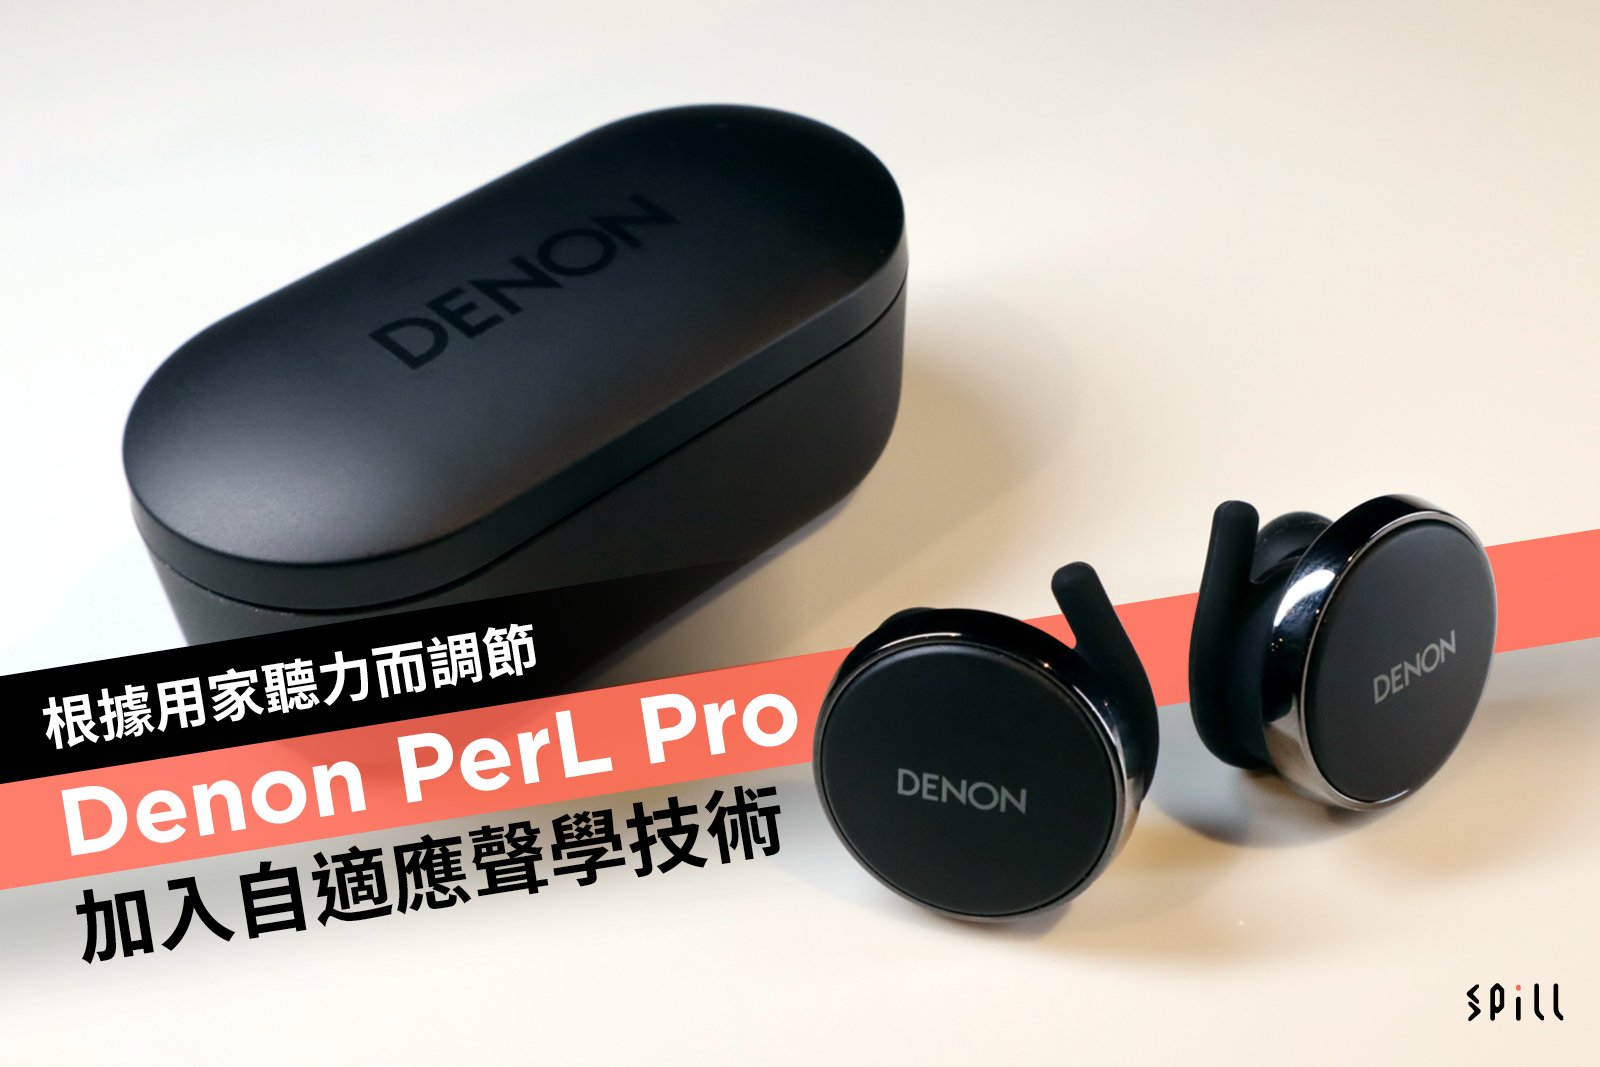 SPILL | 根據用家聽力而調節Denon PerL Pro 加入自適應聲學技術